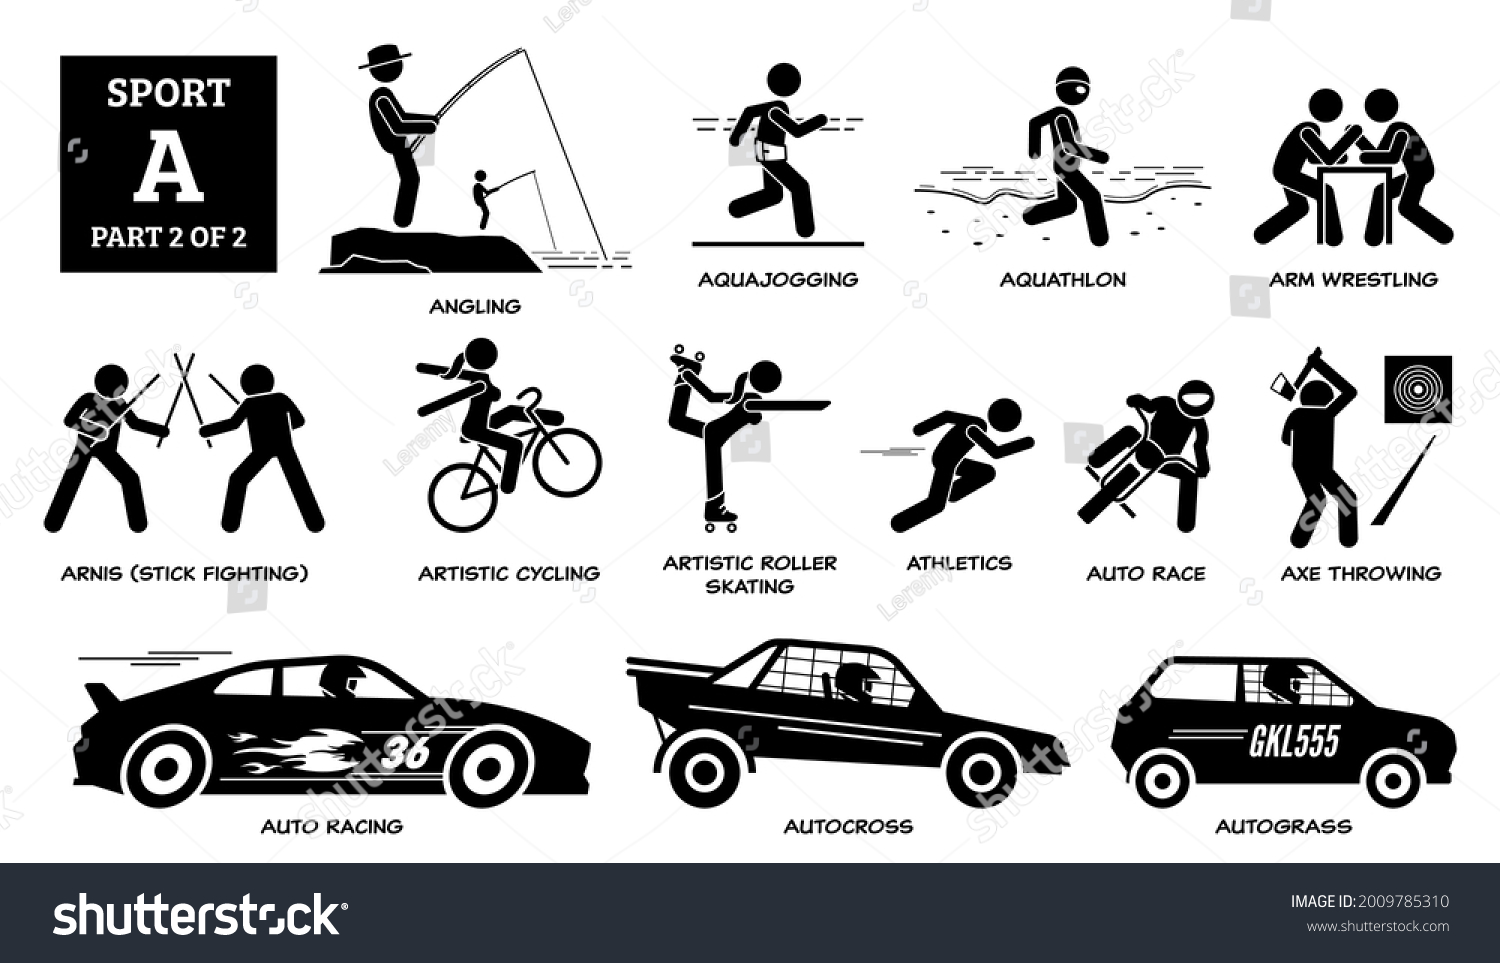 SVG of Sport games alphabet A vector icons pictogram. Angling, aquajogging, aquathlon, arm wrestling, arnis, artistic cycling, roller skating, auto race, axe throwing, auto racing, autocross, and autograss.  svg